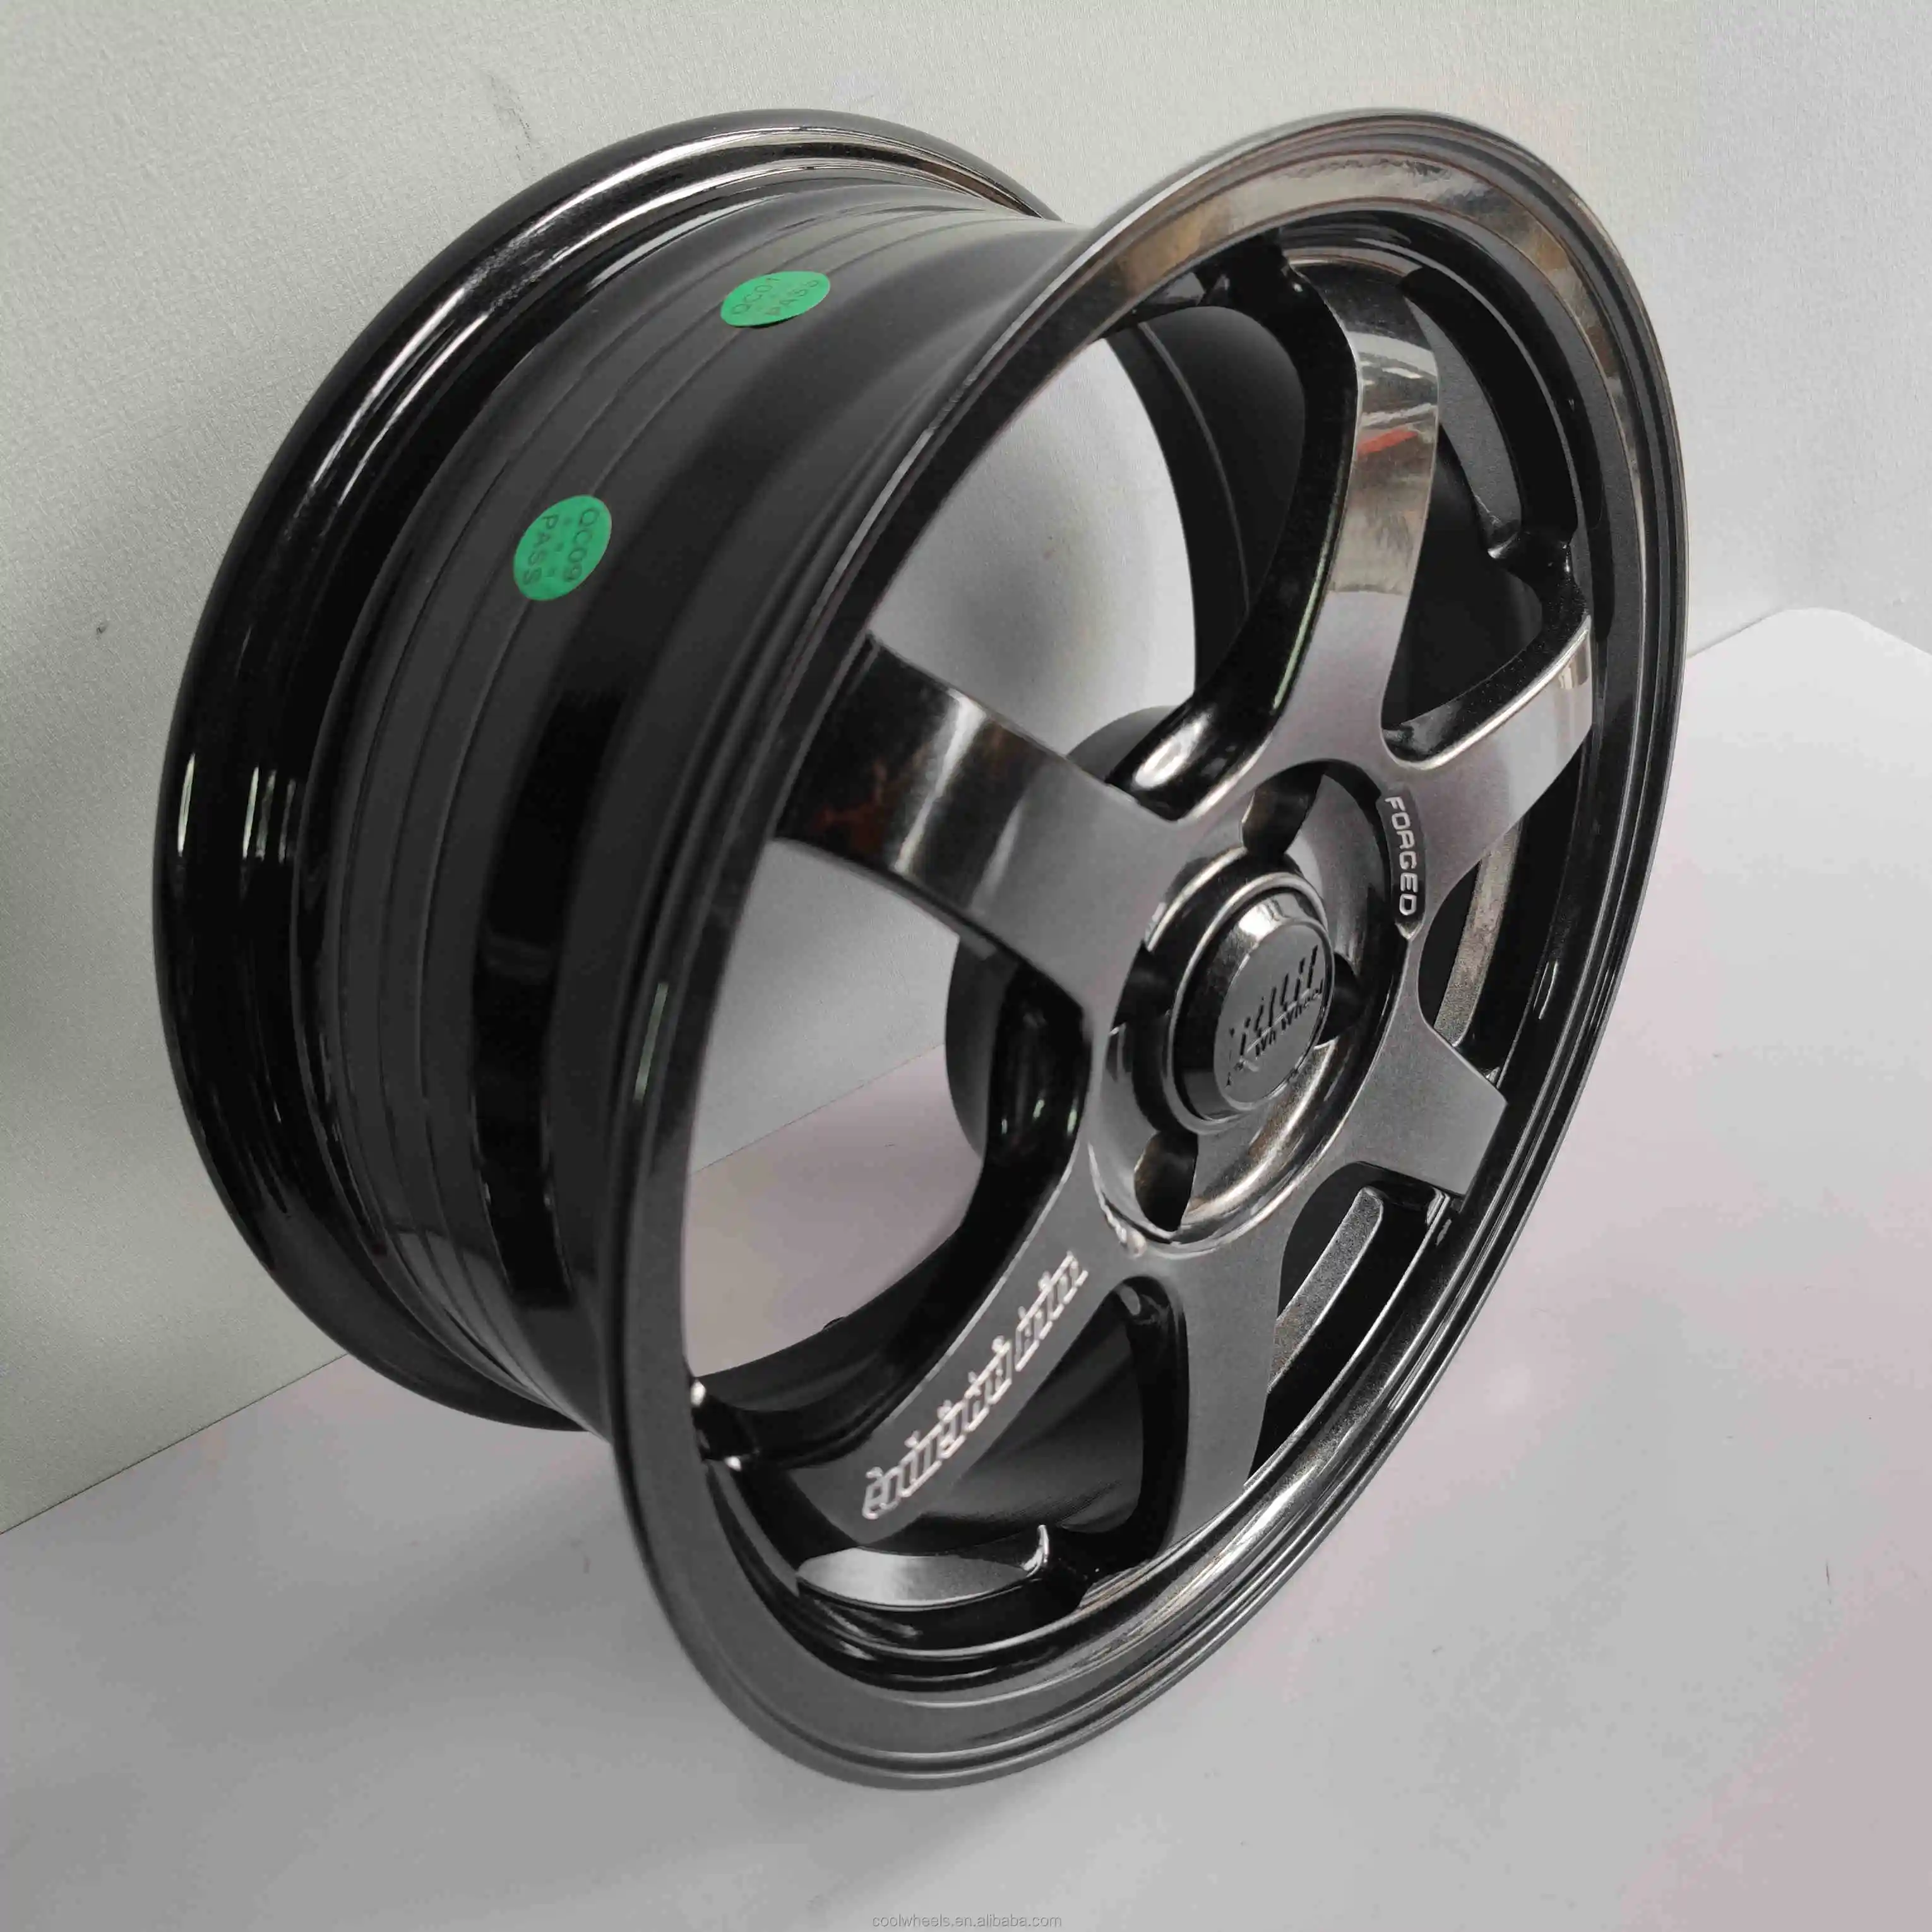 Bku racing passenger car wheels 15 16 17 18 inch 4x100 5x114.3 wheels for volk racing rims TE37 wheels civic jazz GK5 brz gt86